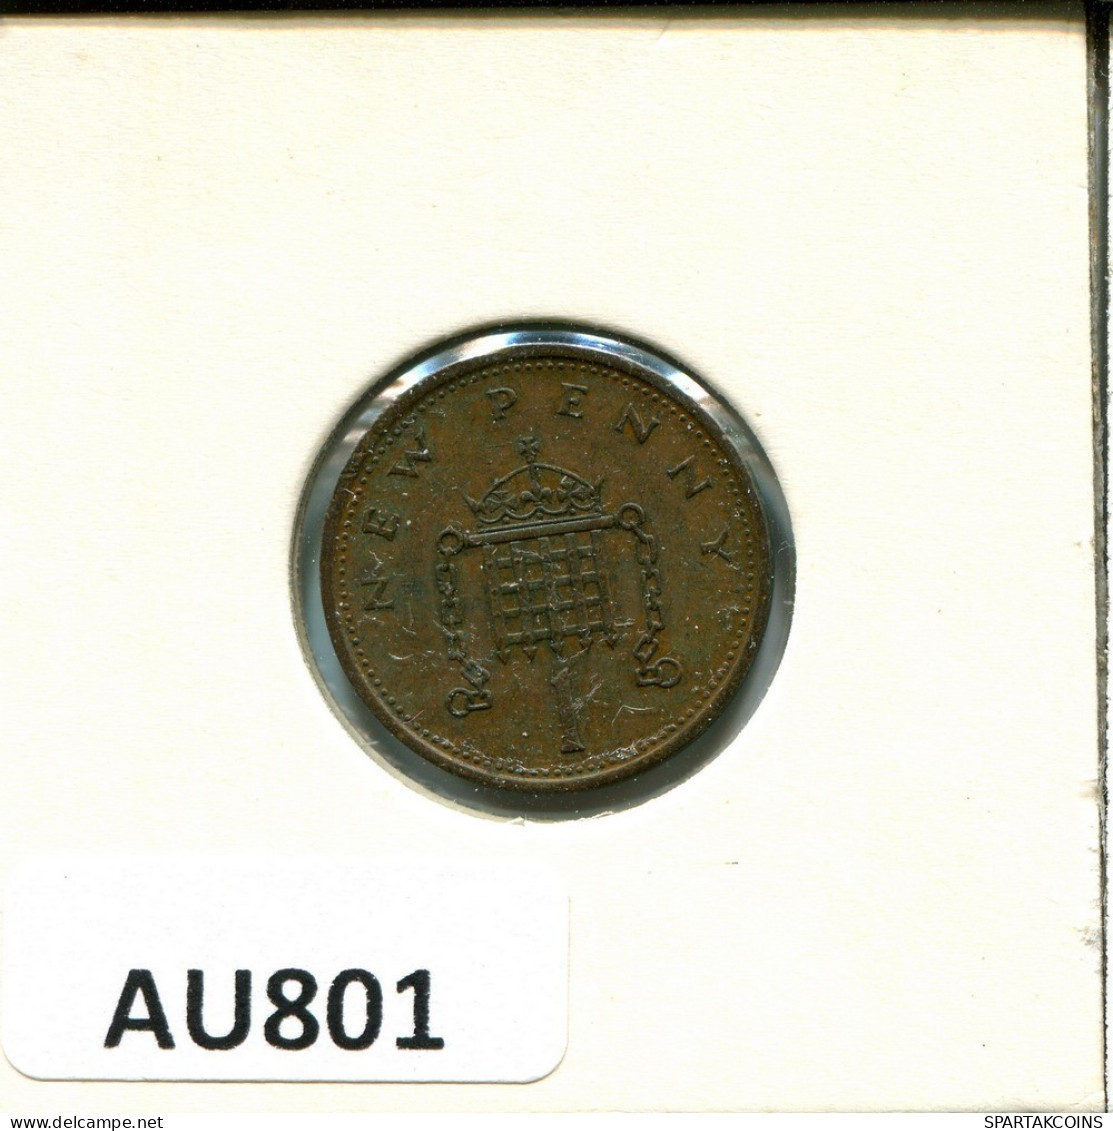 NEW PENNY 1974 UK GROßBRITANNIEN GREAT BRITAIN Münze #AU801.D.A - 1 Penny & 1 New Penny